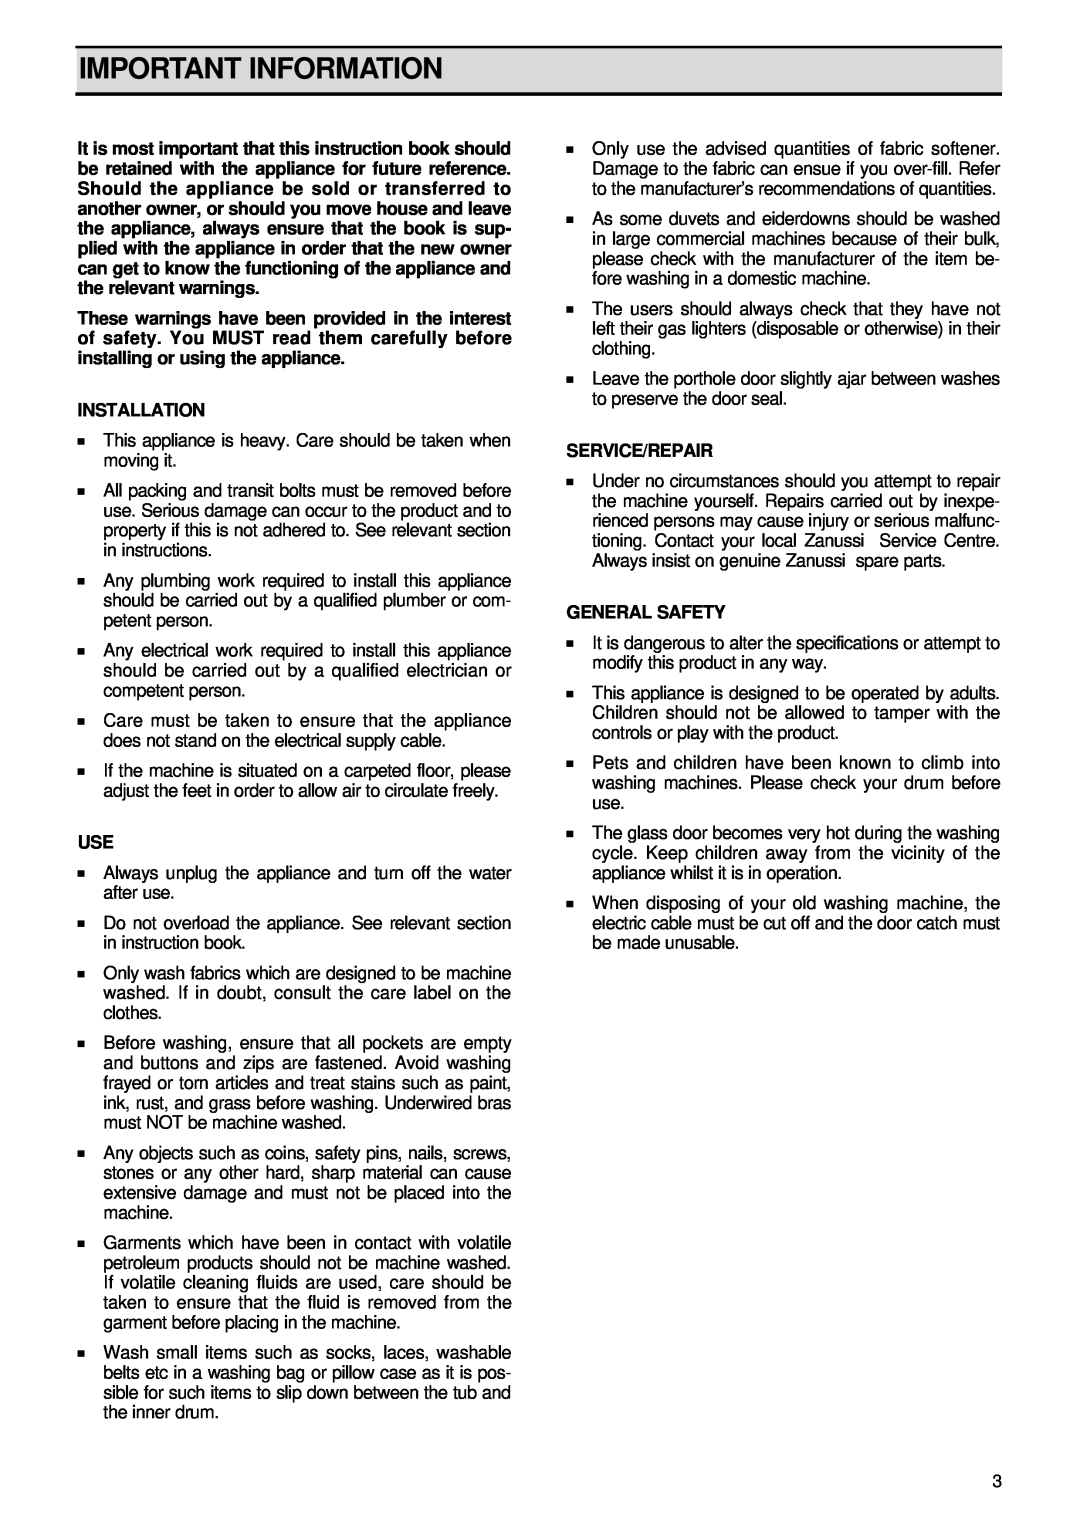 Zanussi FL 1085 AL manual Important Information, Installation, Service/Repair, General Safety 